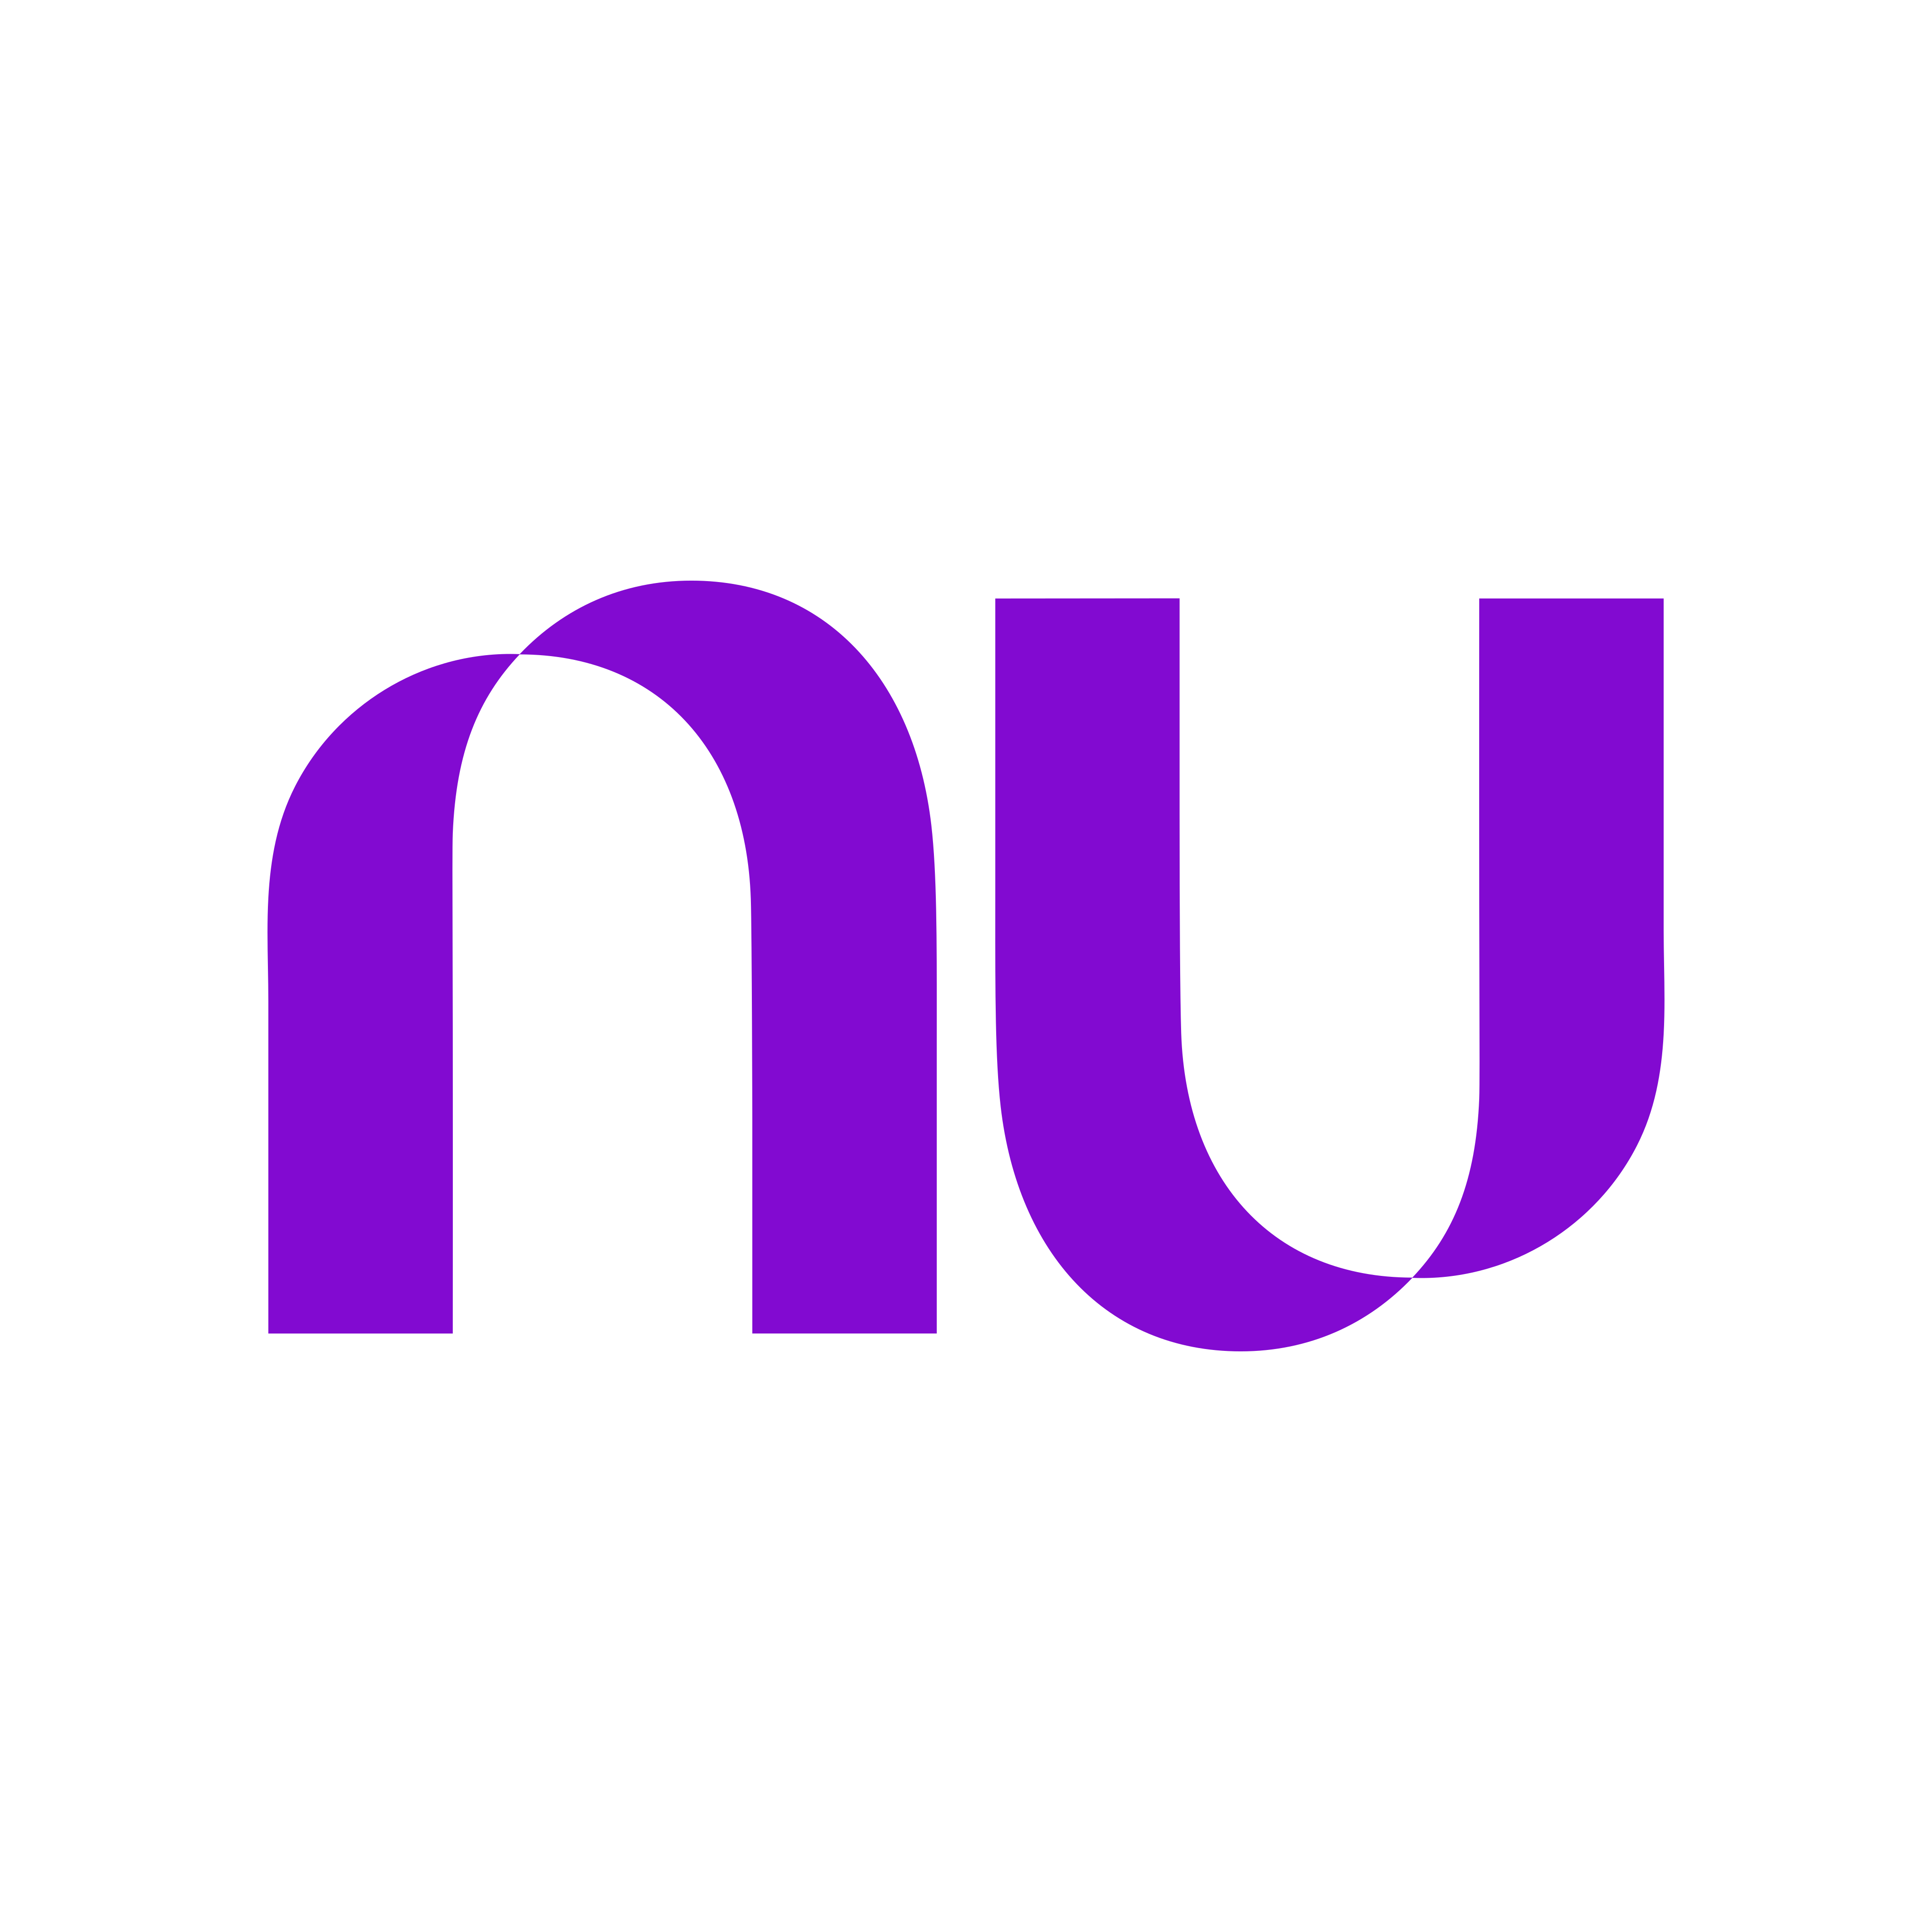 nubank logo 0 1 - Nubank Logo